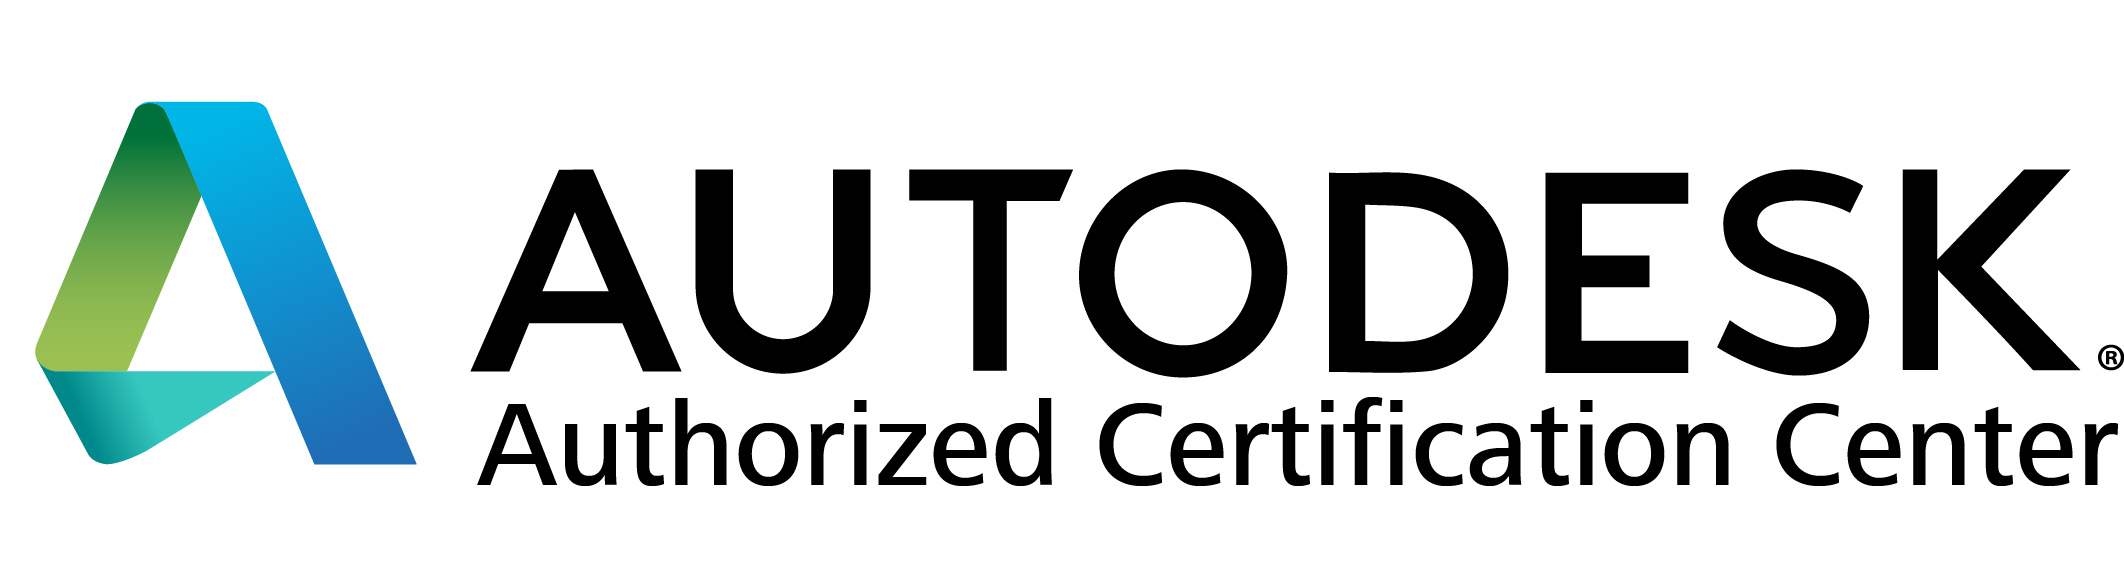 Autodesk Certification center